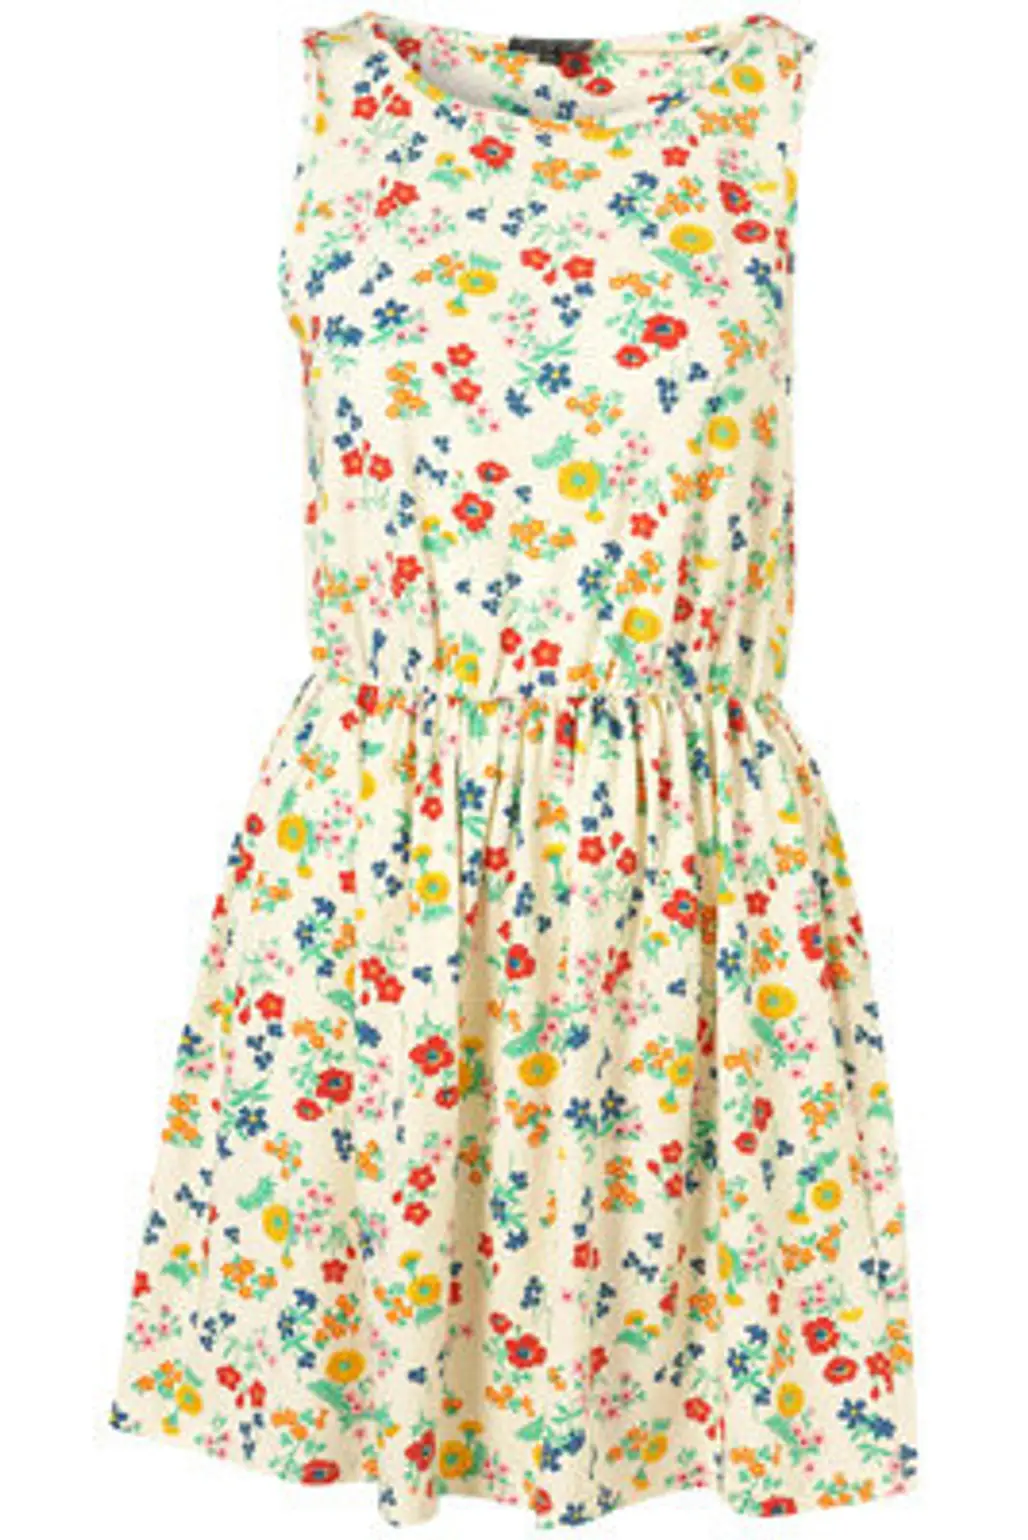 Topshop Cream Floral Meadow Printe Sleeveless Dress